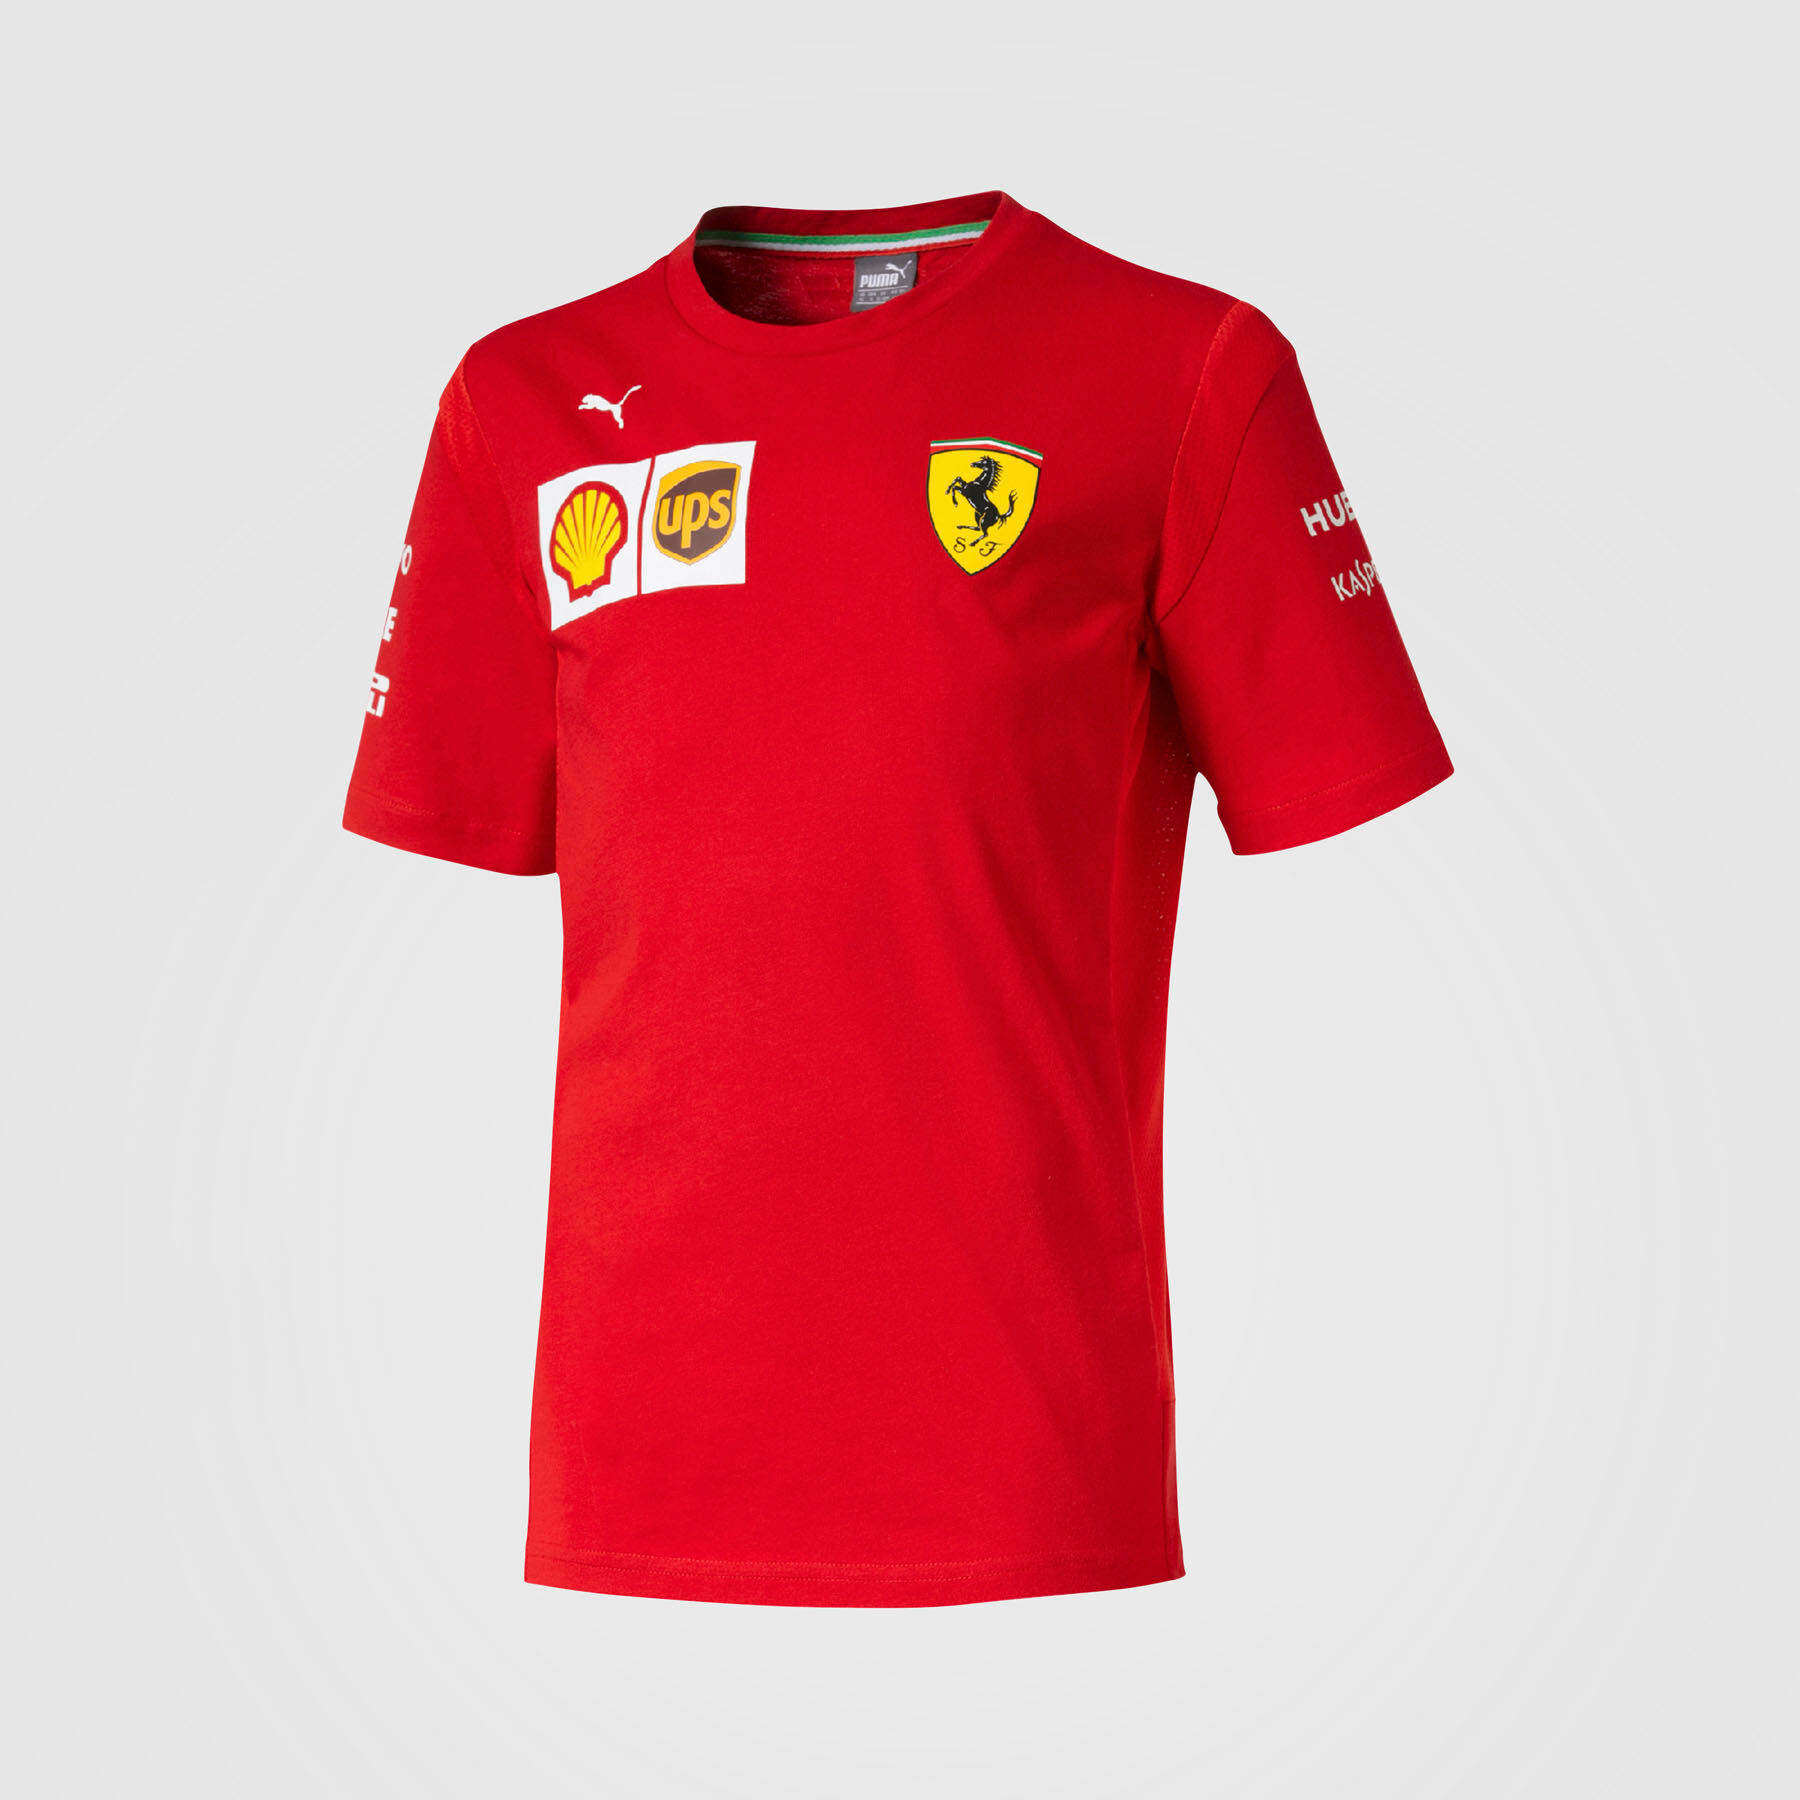 Kids 2019 Team T-Shirt - Scuderia Ferrari Formula 1 | Fuel For Fans